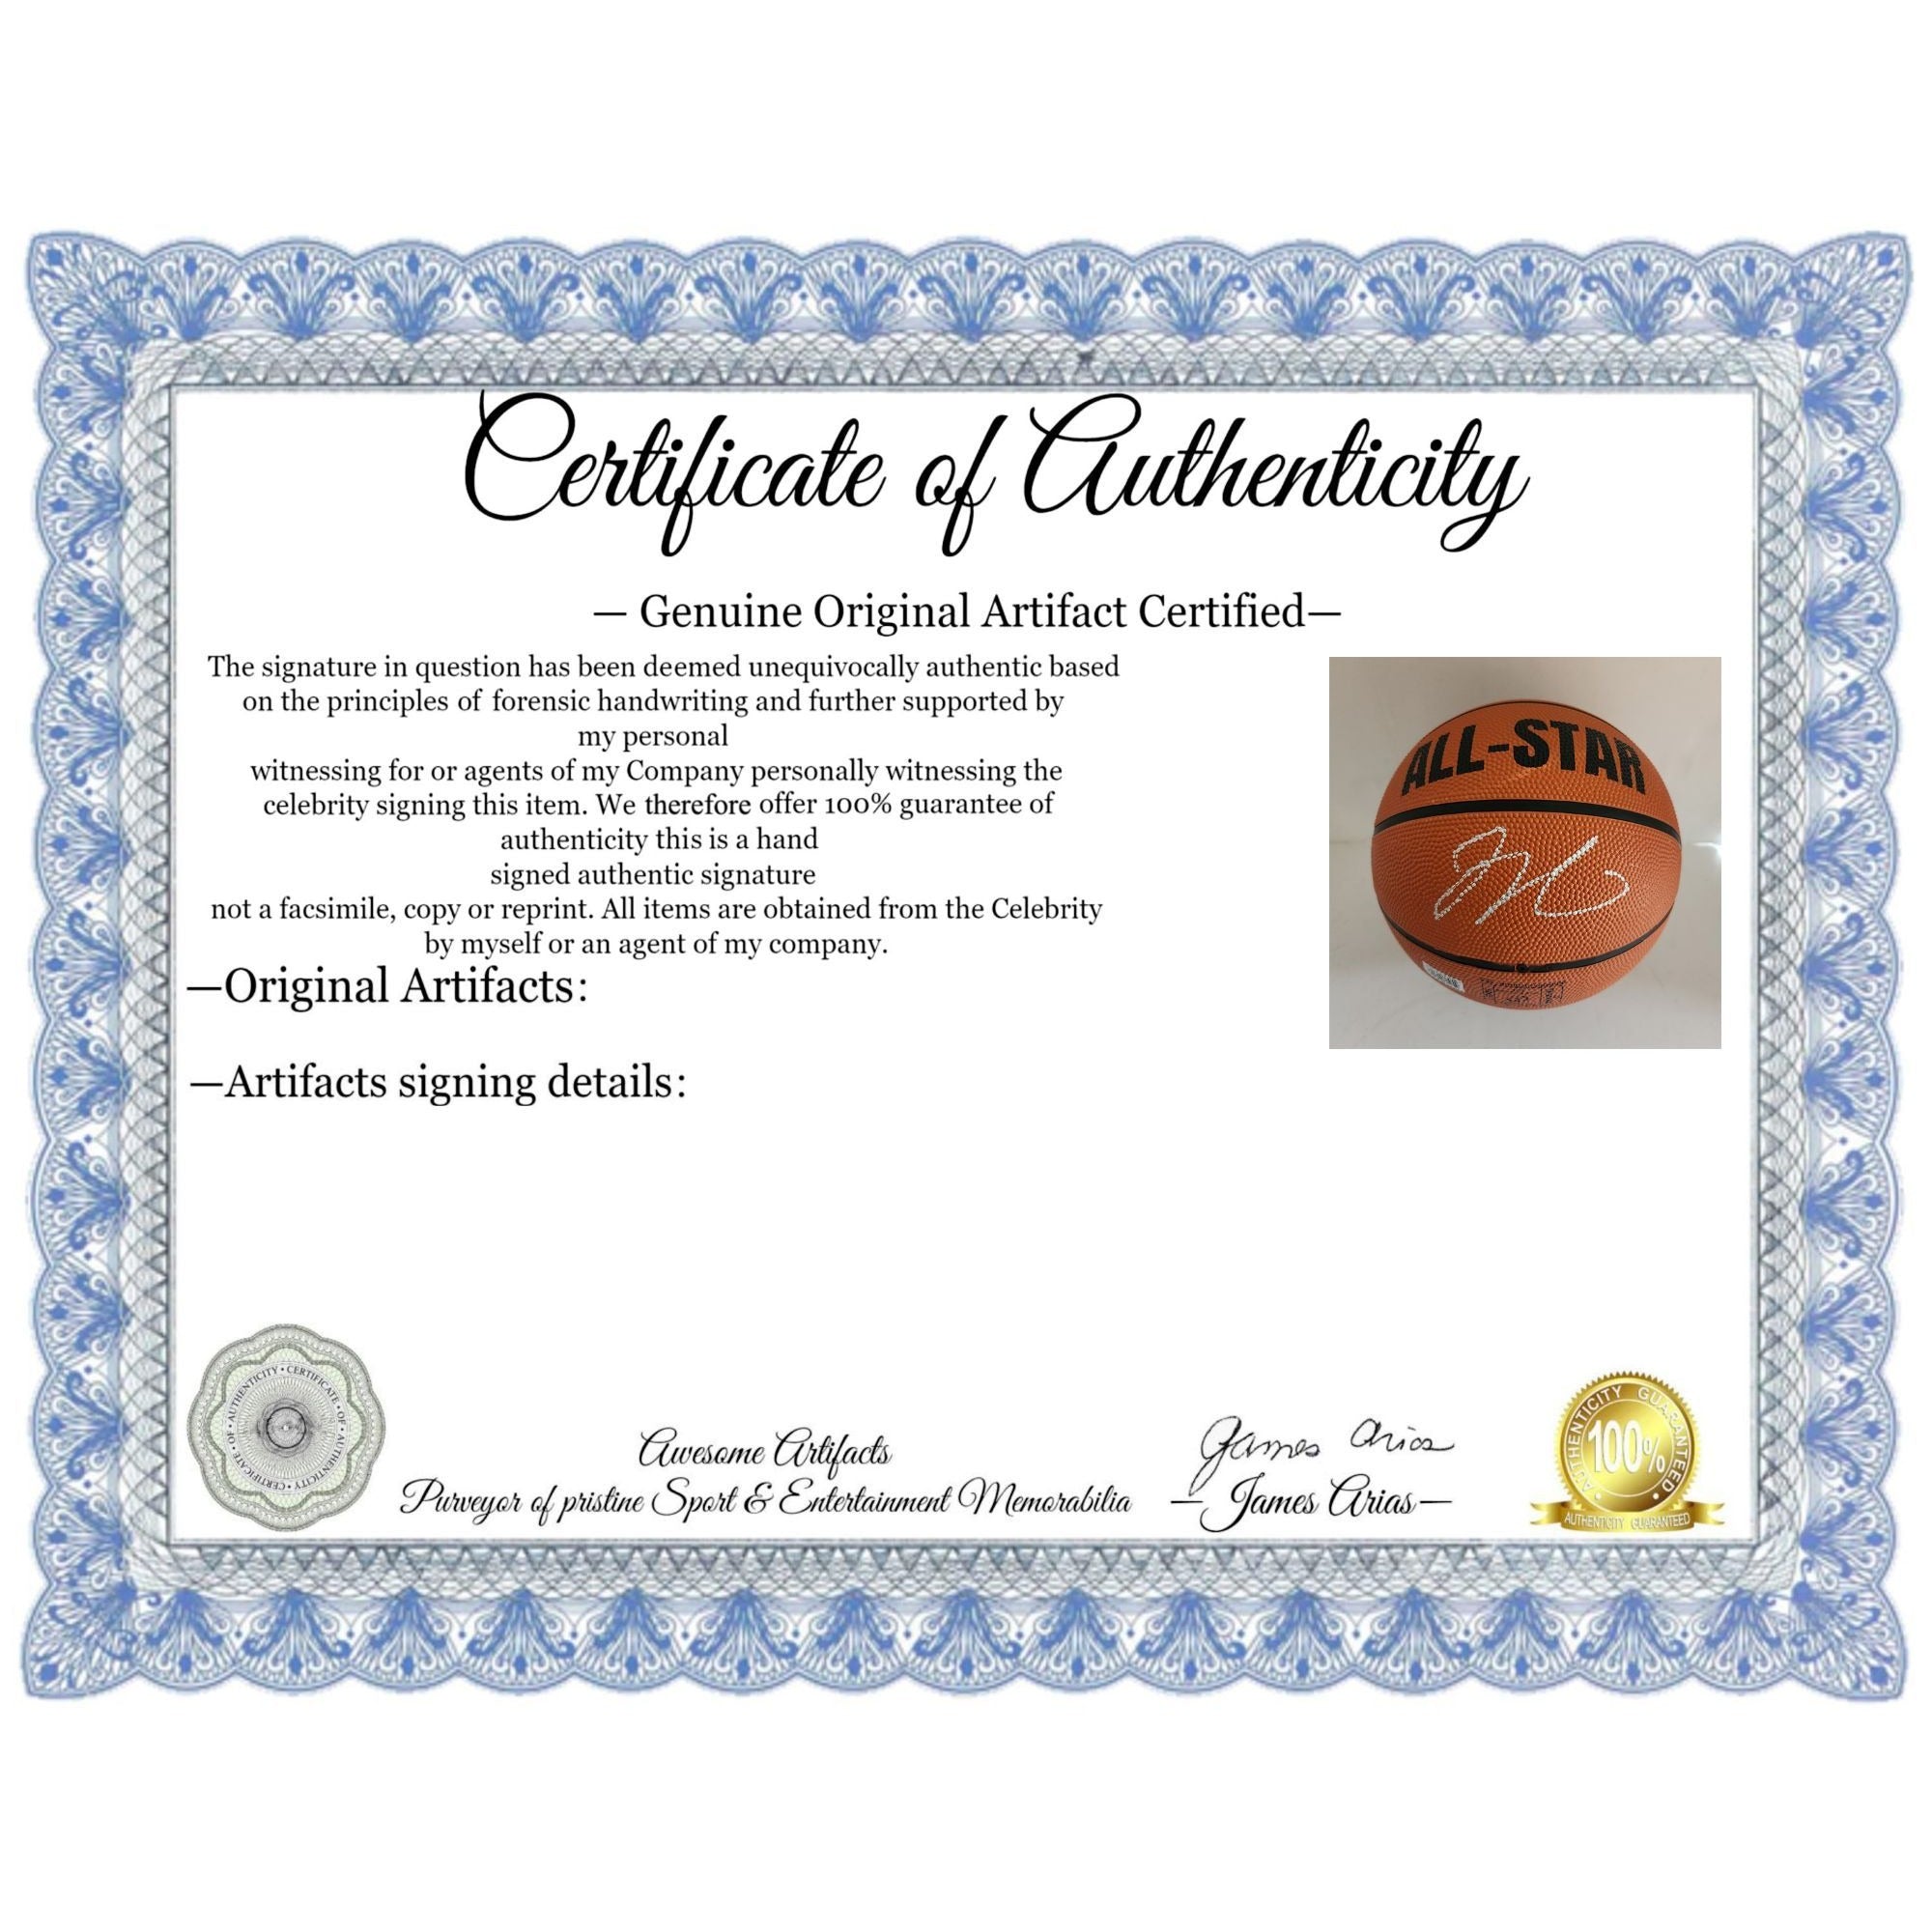 Jason Tatum Boston Celtics full size NBA basketball signed with proof & free acrylic display case